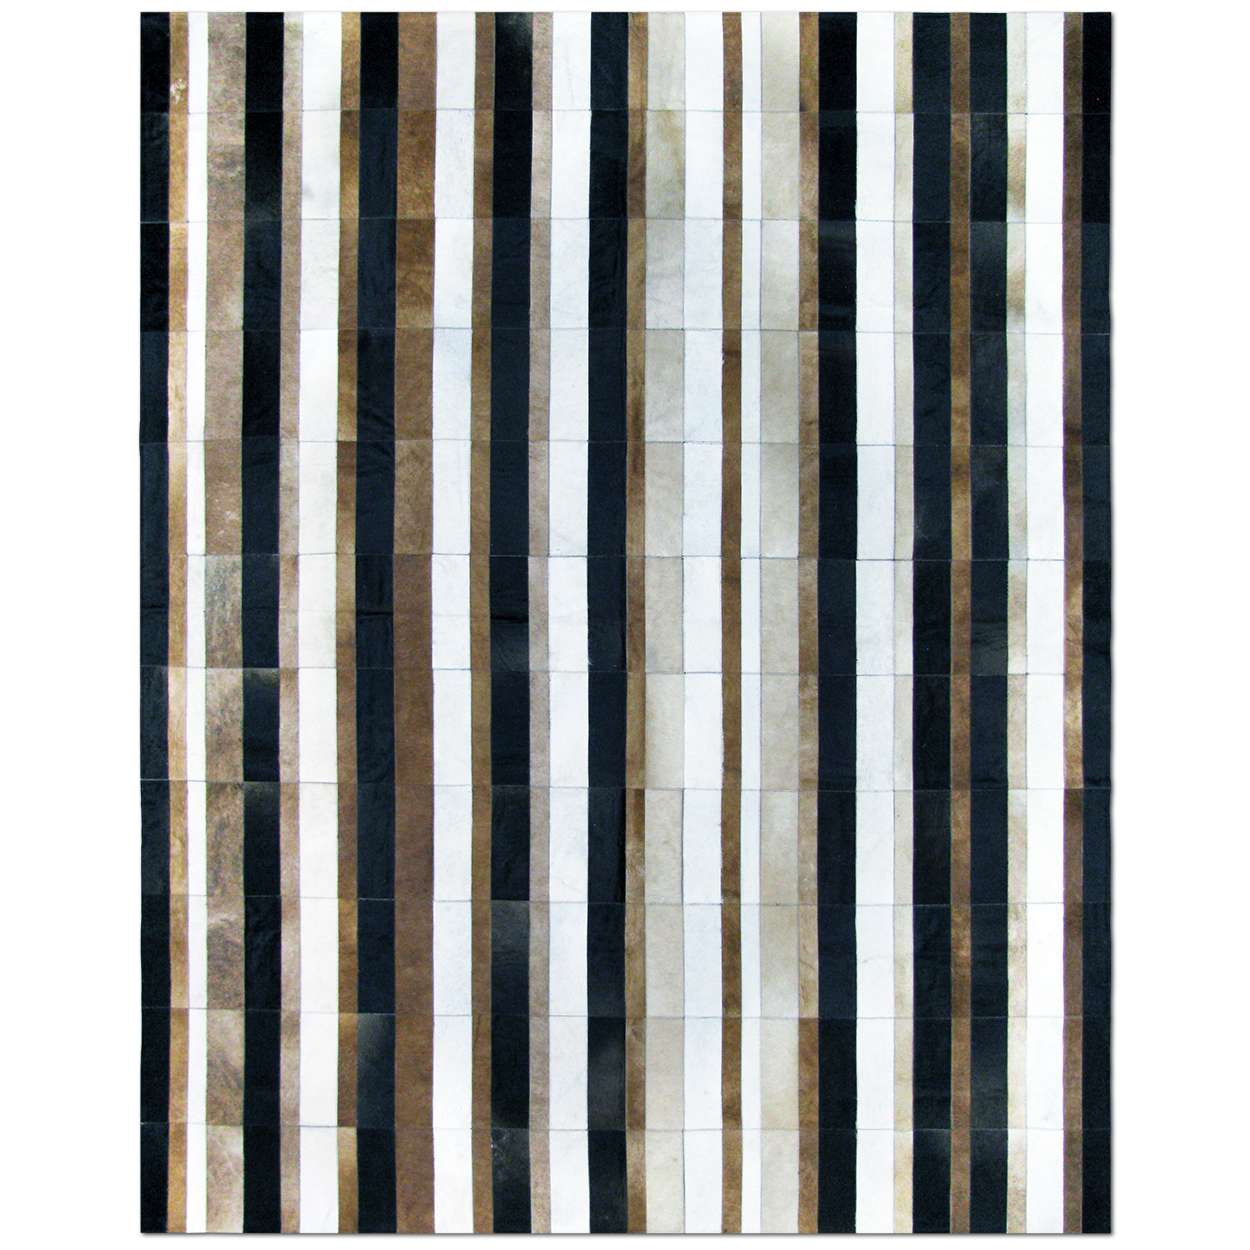 Custom Cowhide Patchwork Rug - Vertical Stripes Black, Brown, and Gray